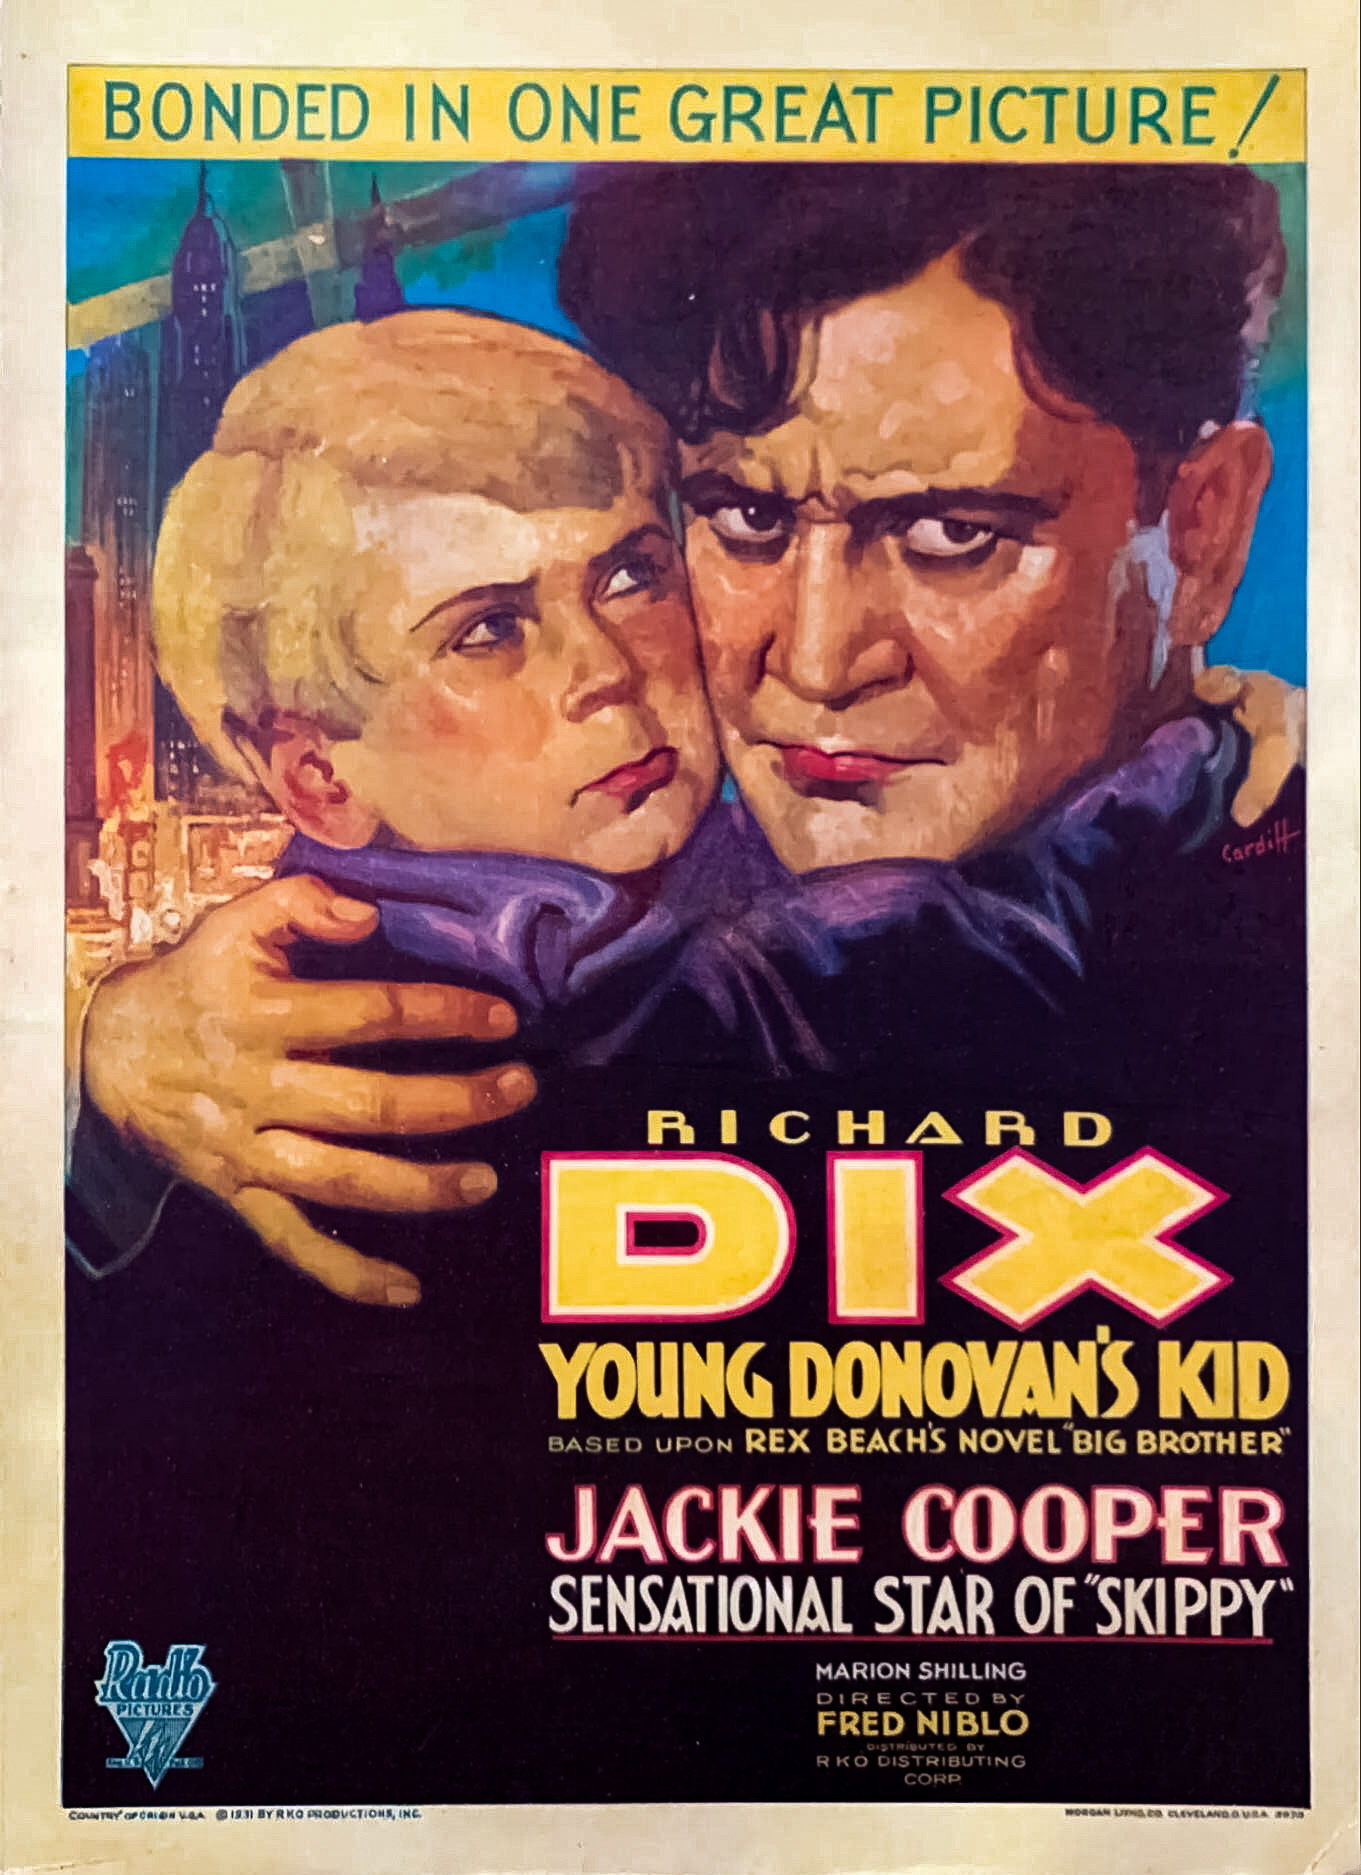 YOUNG DONOVAN'S KID (1931)